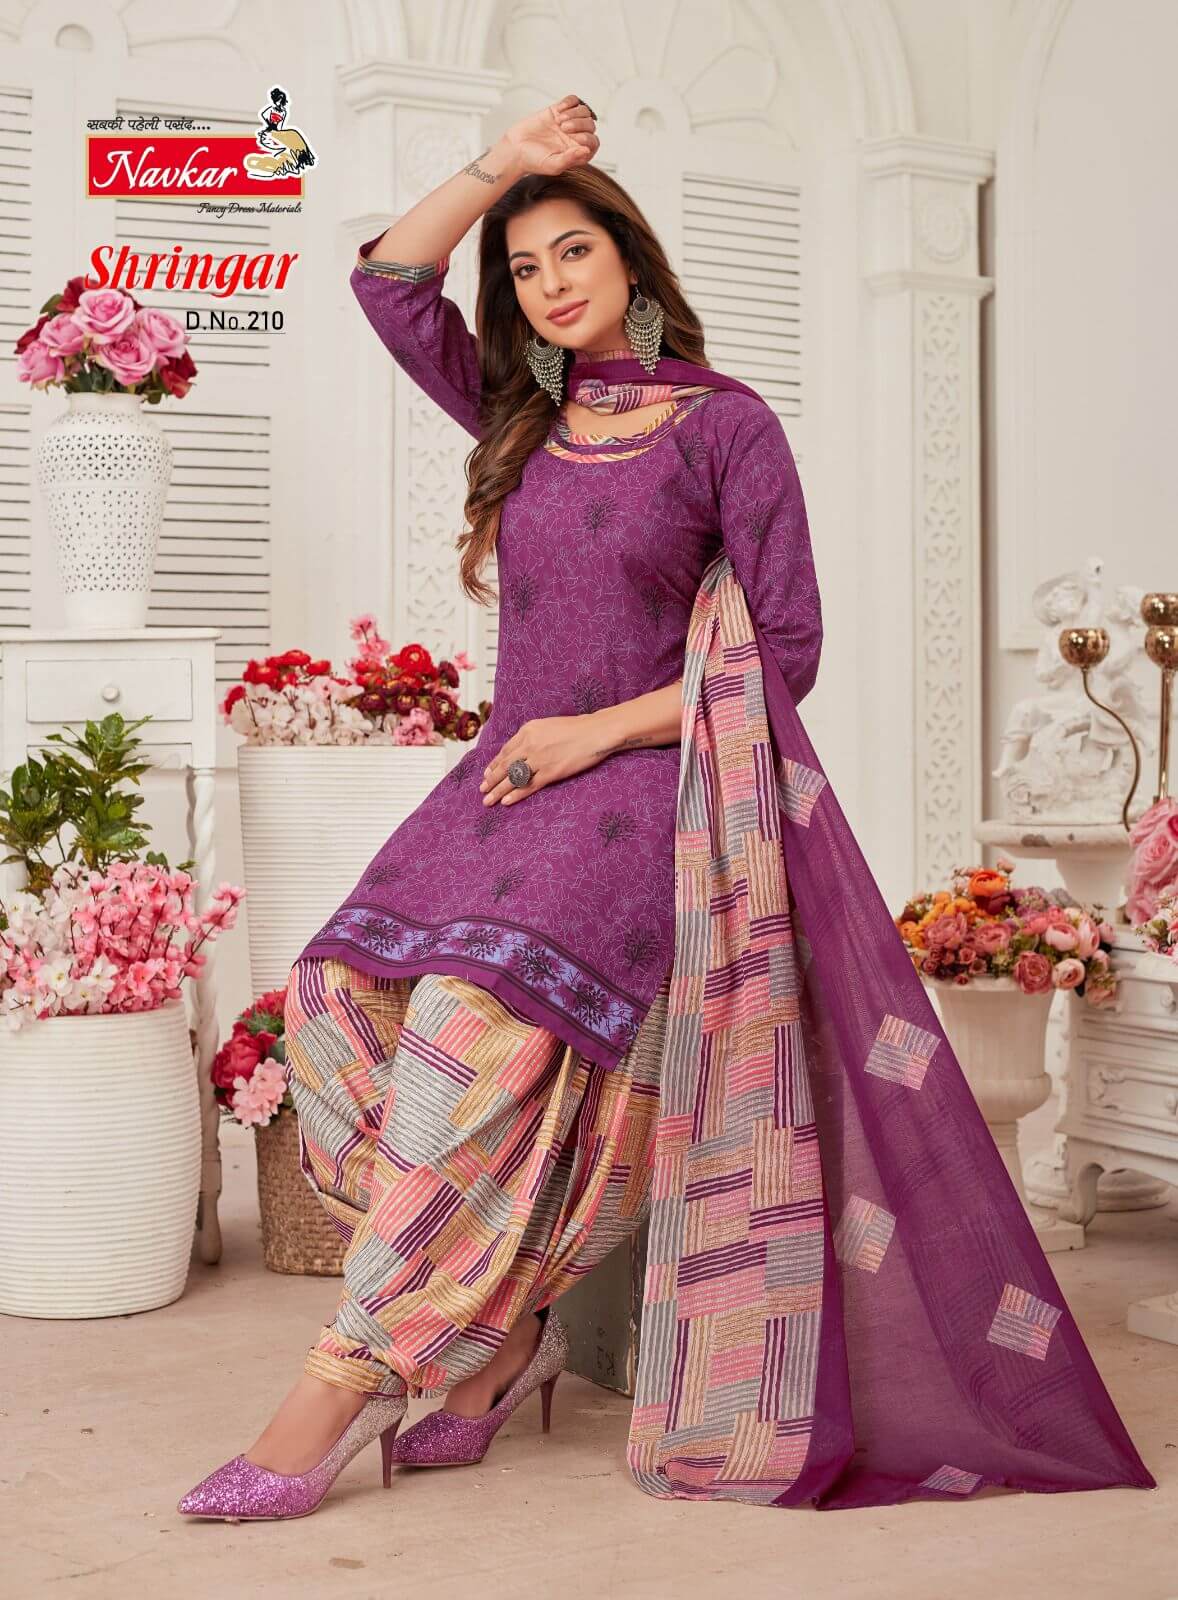 Navkar Shringar vol 2 Readymade Dress Catalog collection 4